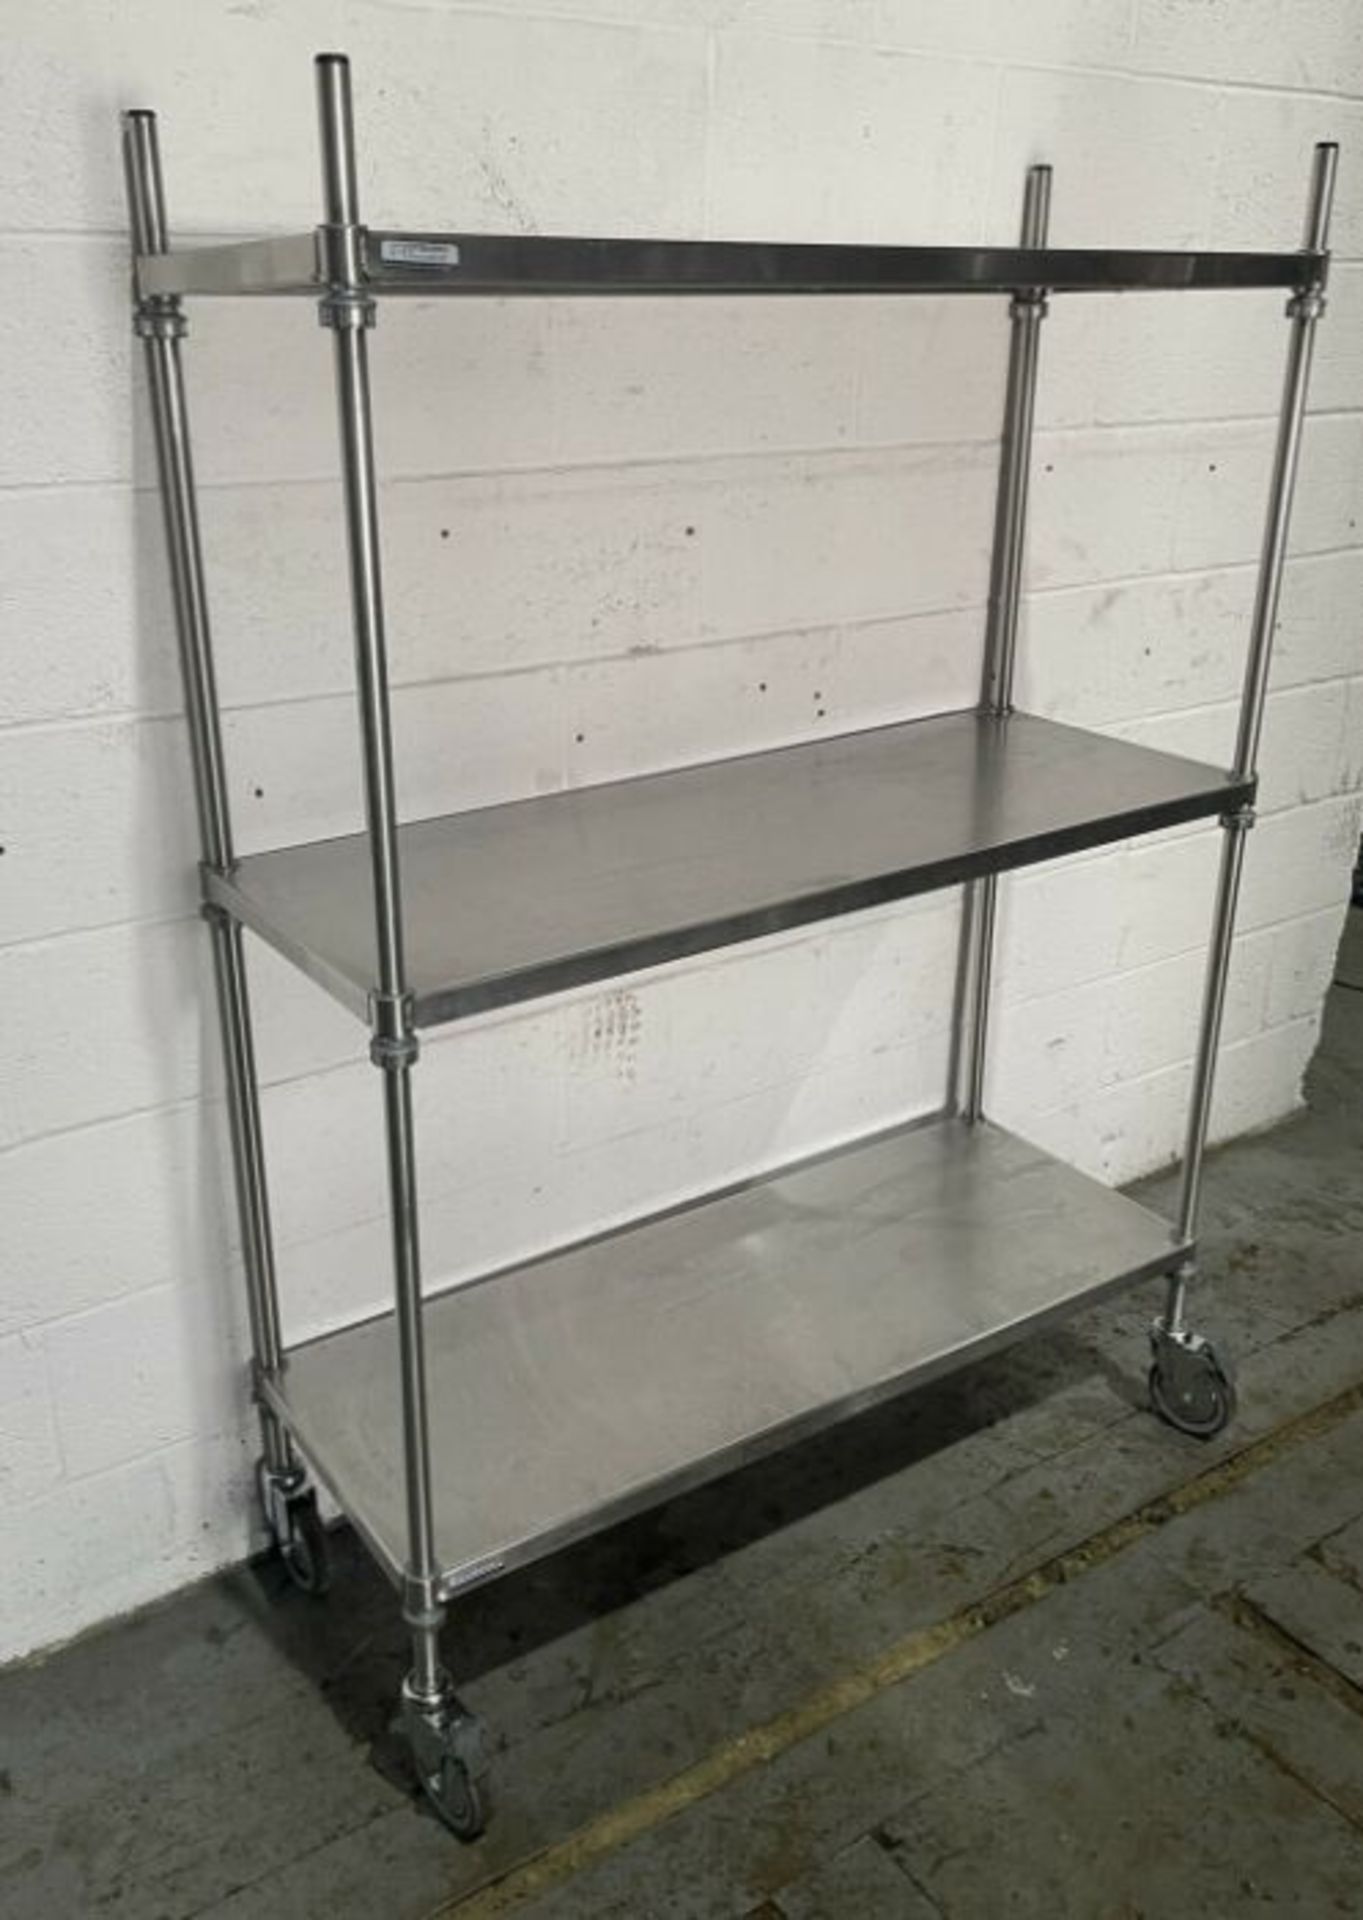 Craven Firmashelf Stainless Steel Shelf - Image 3 of 4